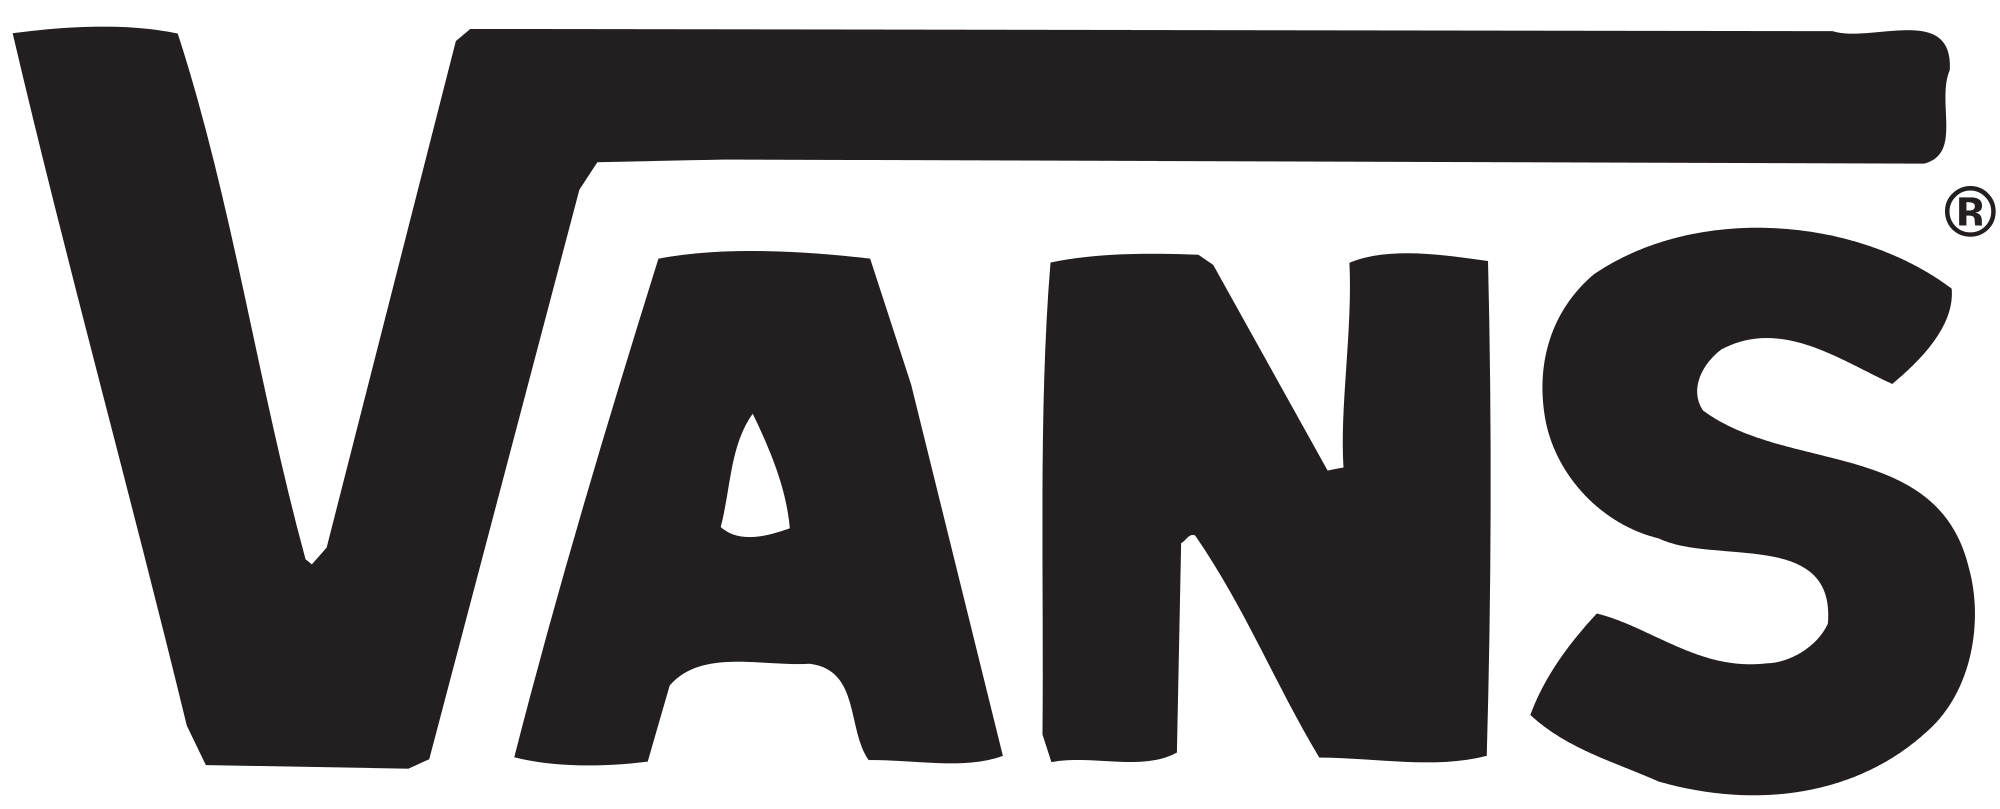 File:Vans (brand) logo.png